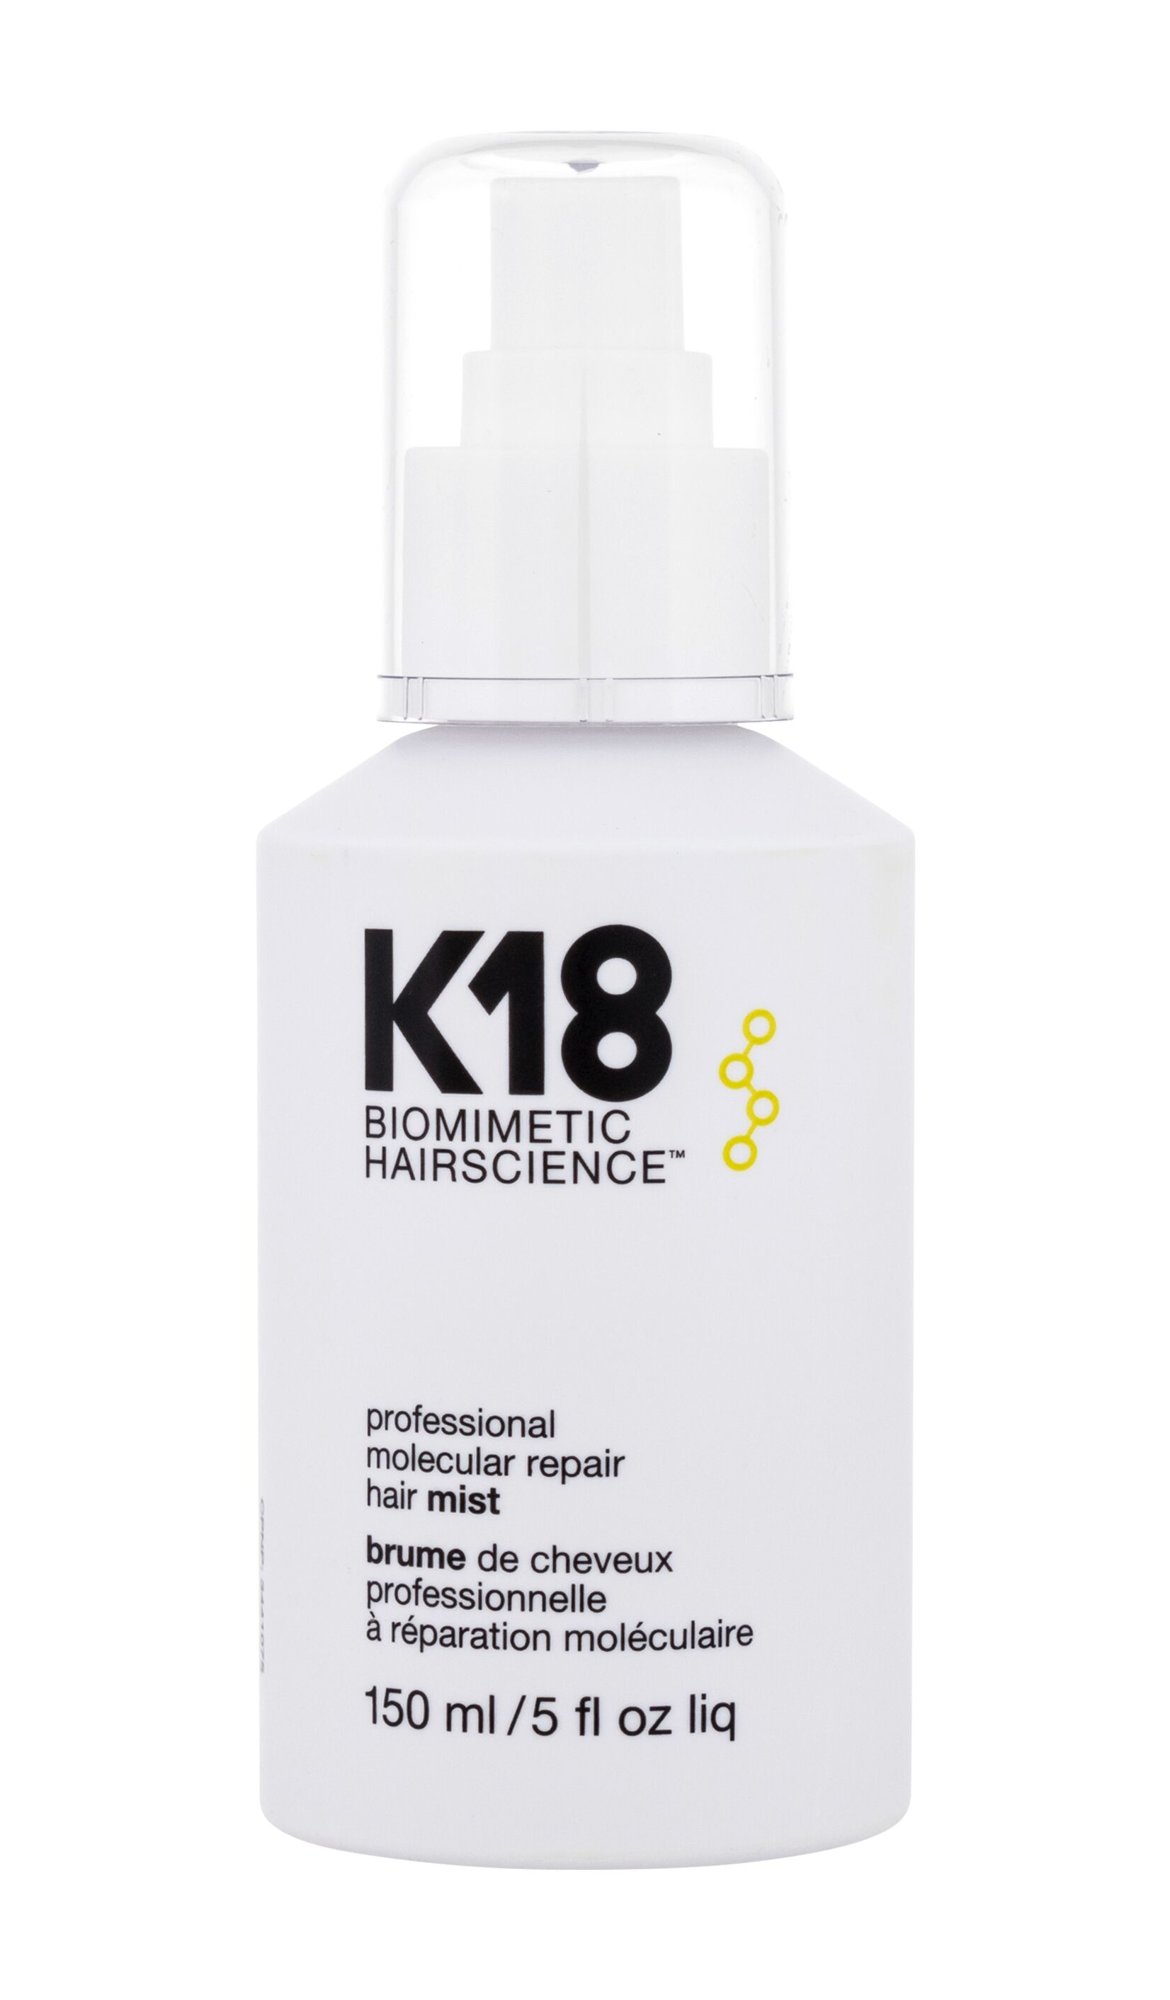 K18 Biomimetic Hairscience Professional Molecular Repair Hair Mist paliekama priemonė plaukams